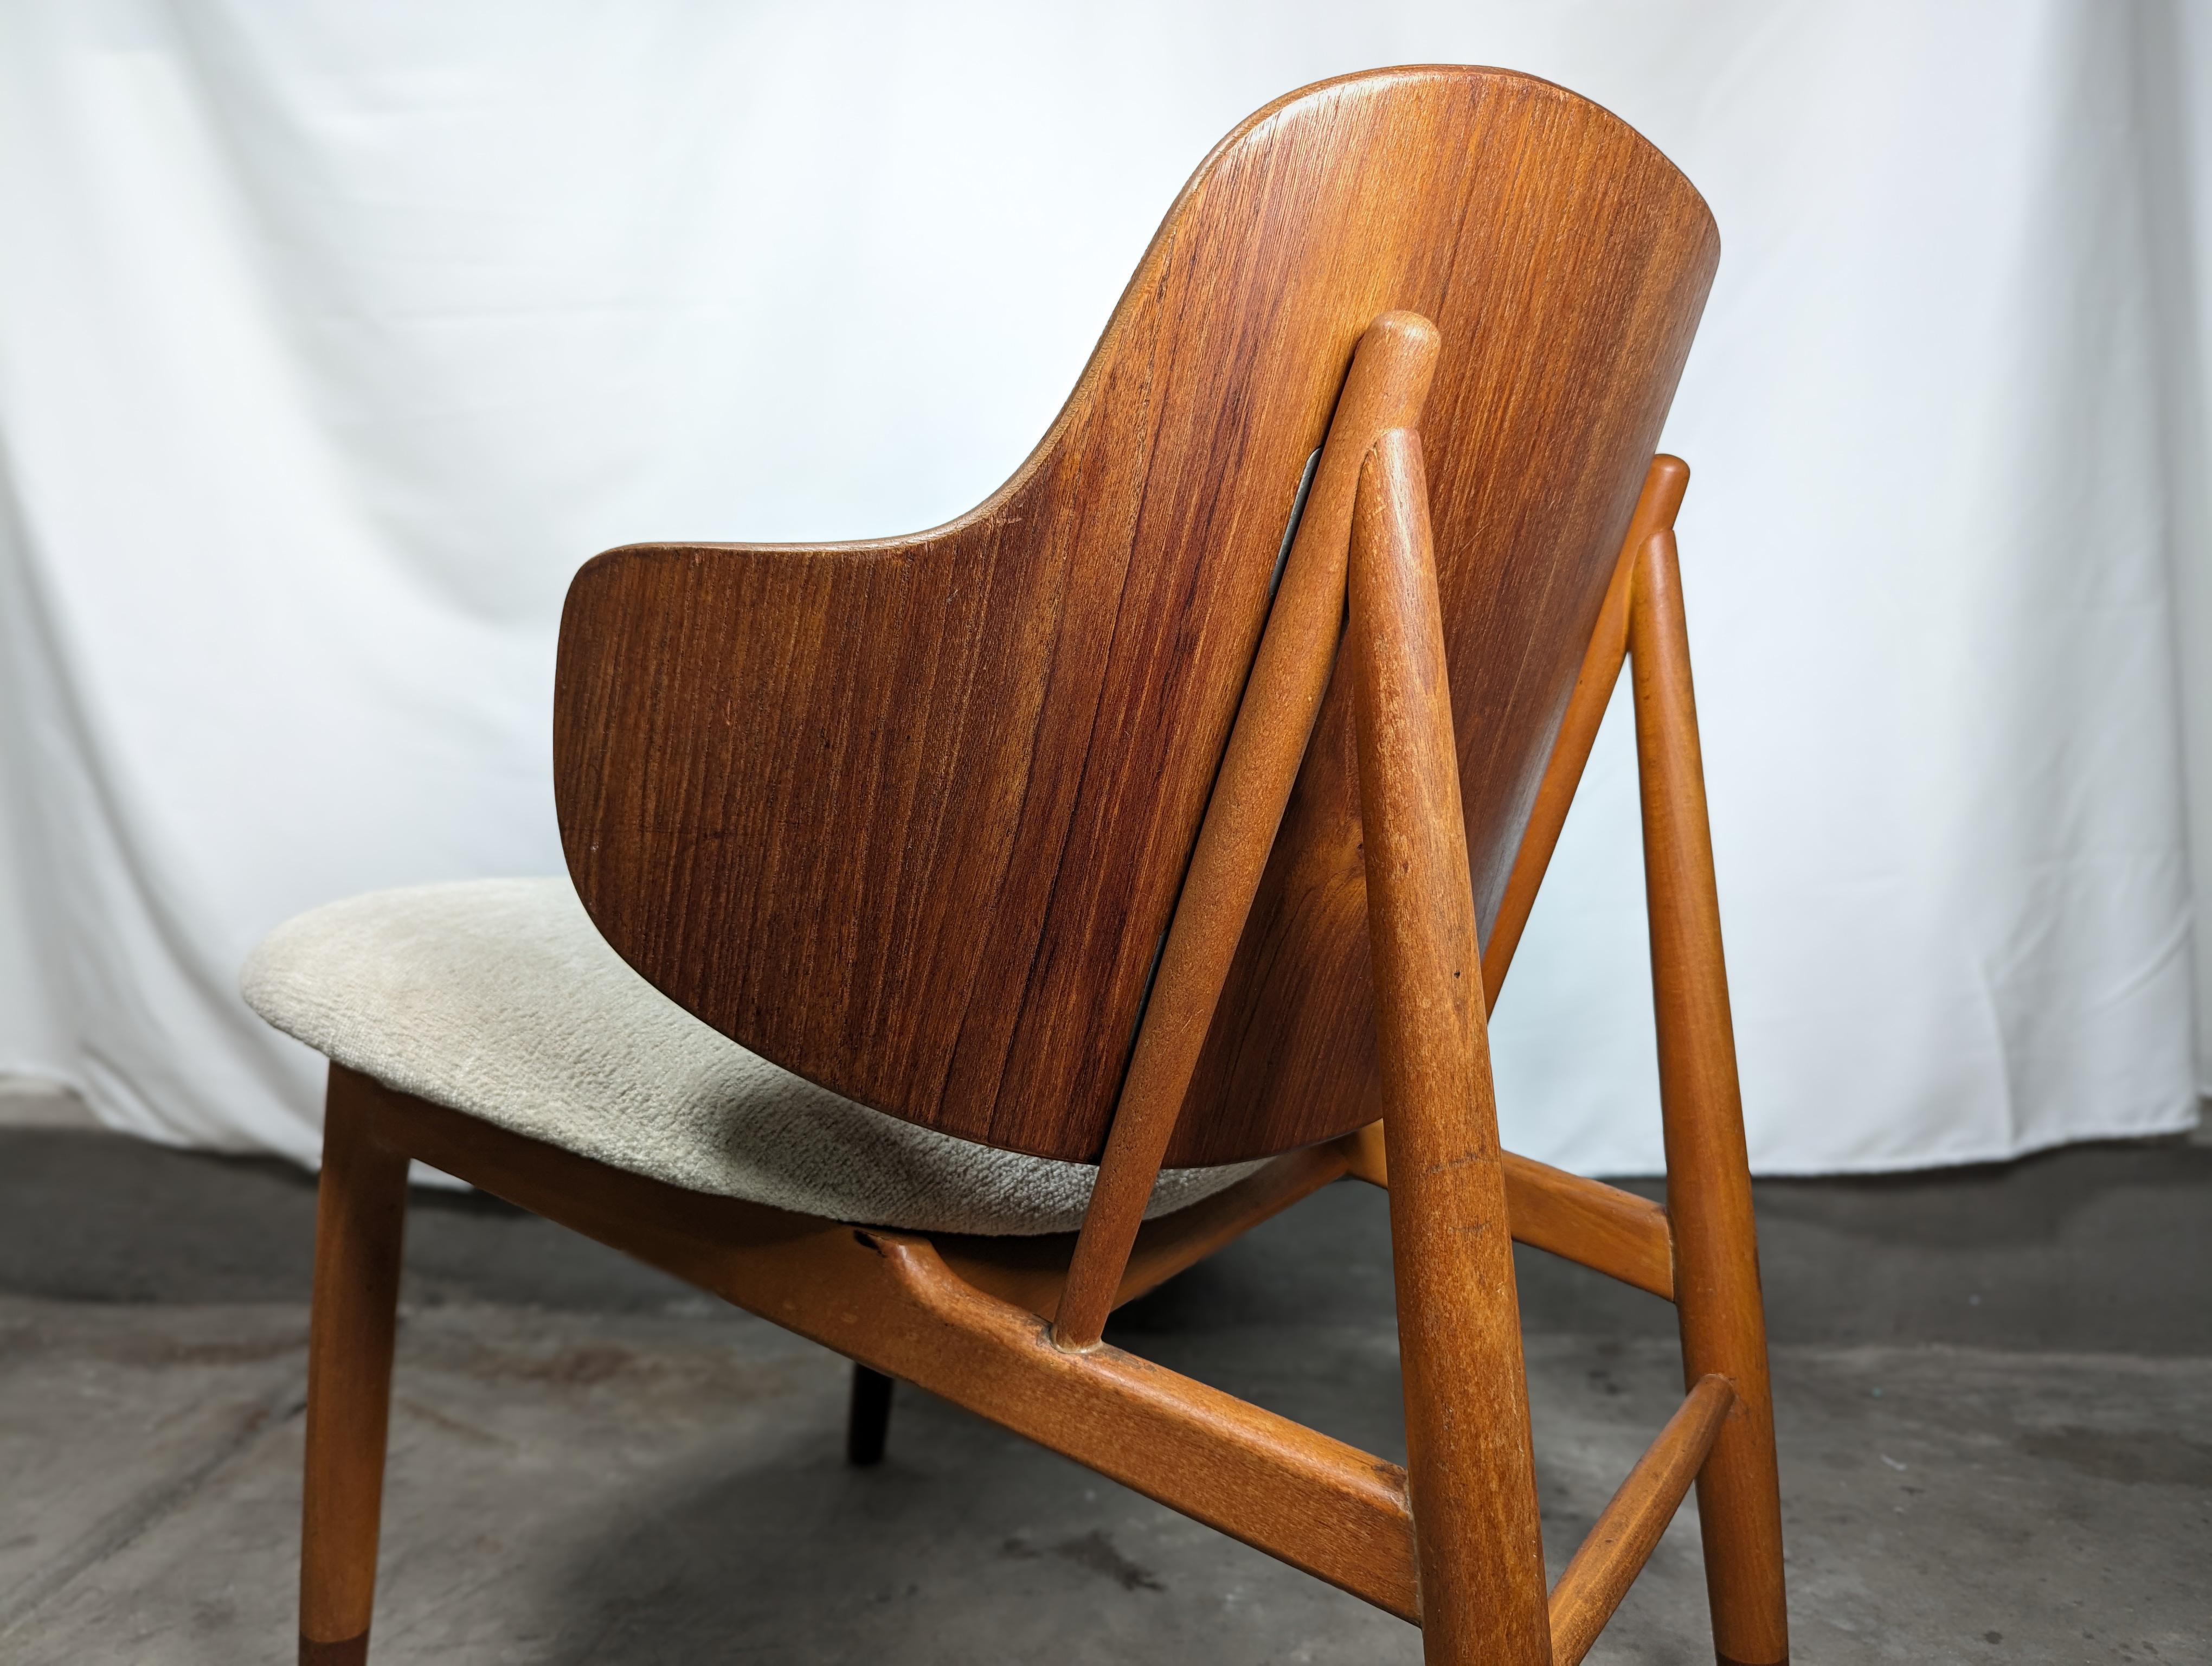 Scandinavian Modern Mid Century Danish Teak & Beech Wood Penguin Chair by Ib Kofod-Larsen, c1950s For Sale